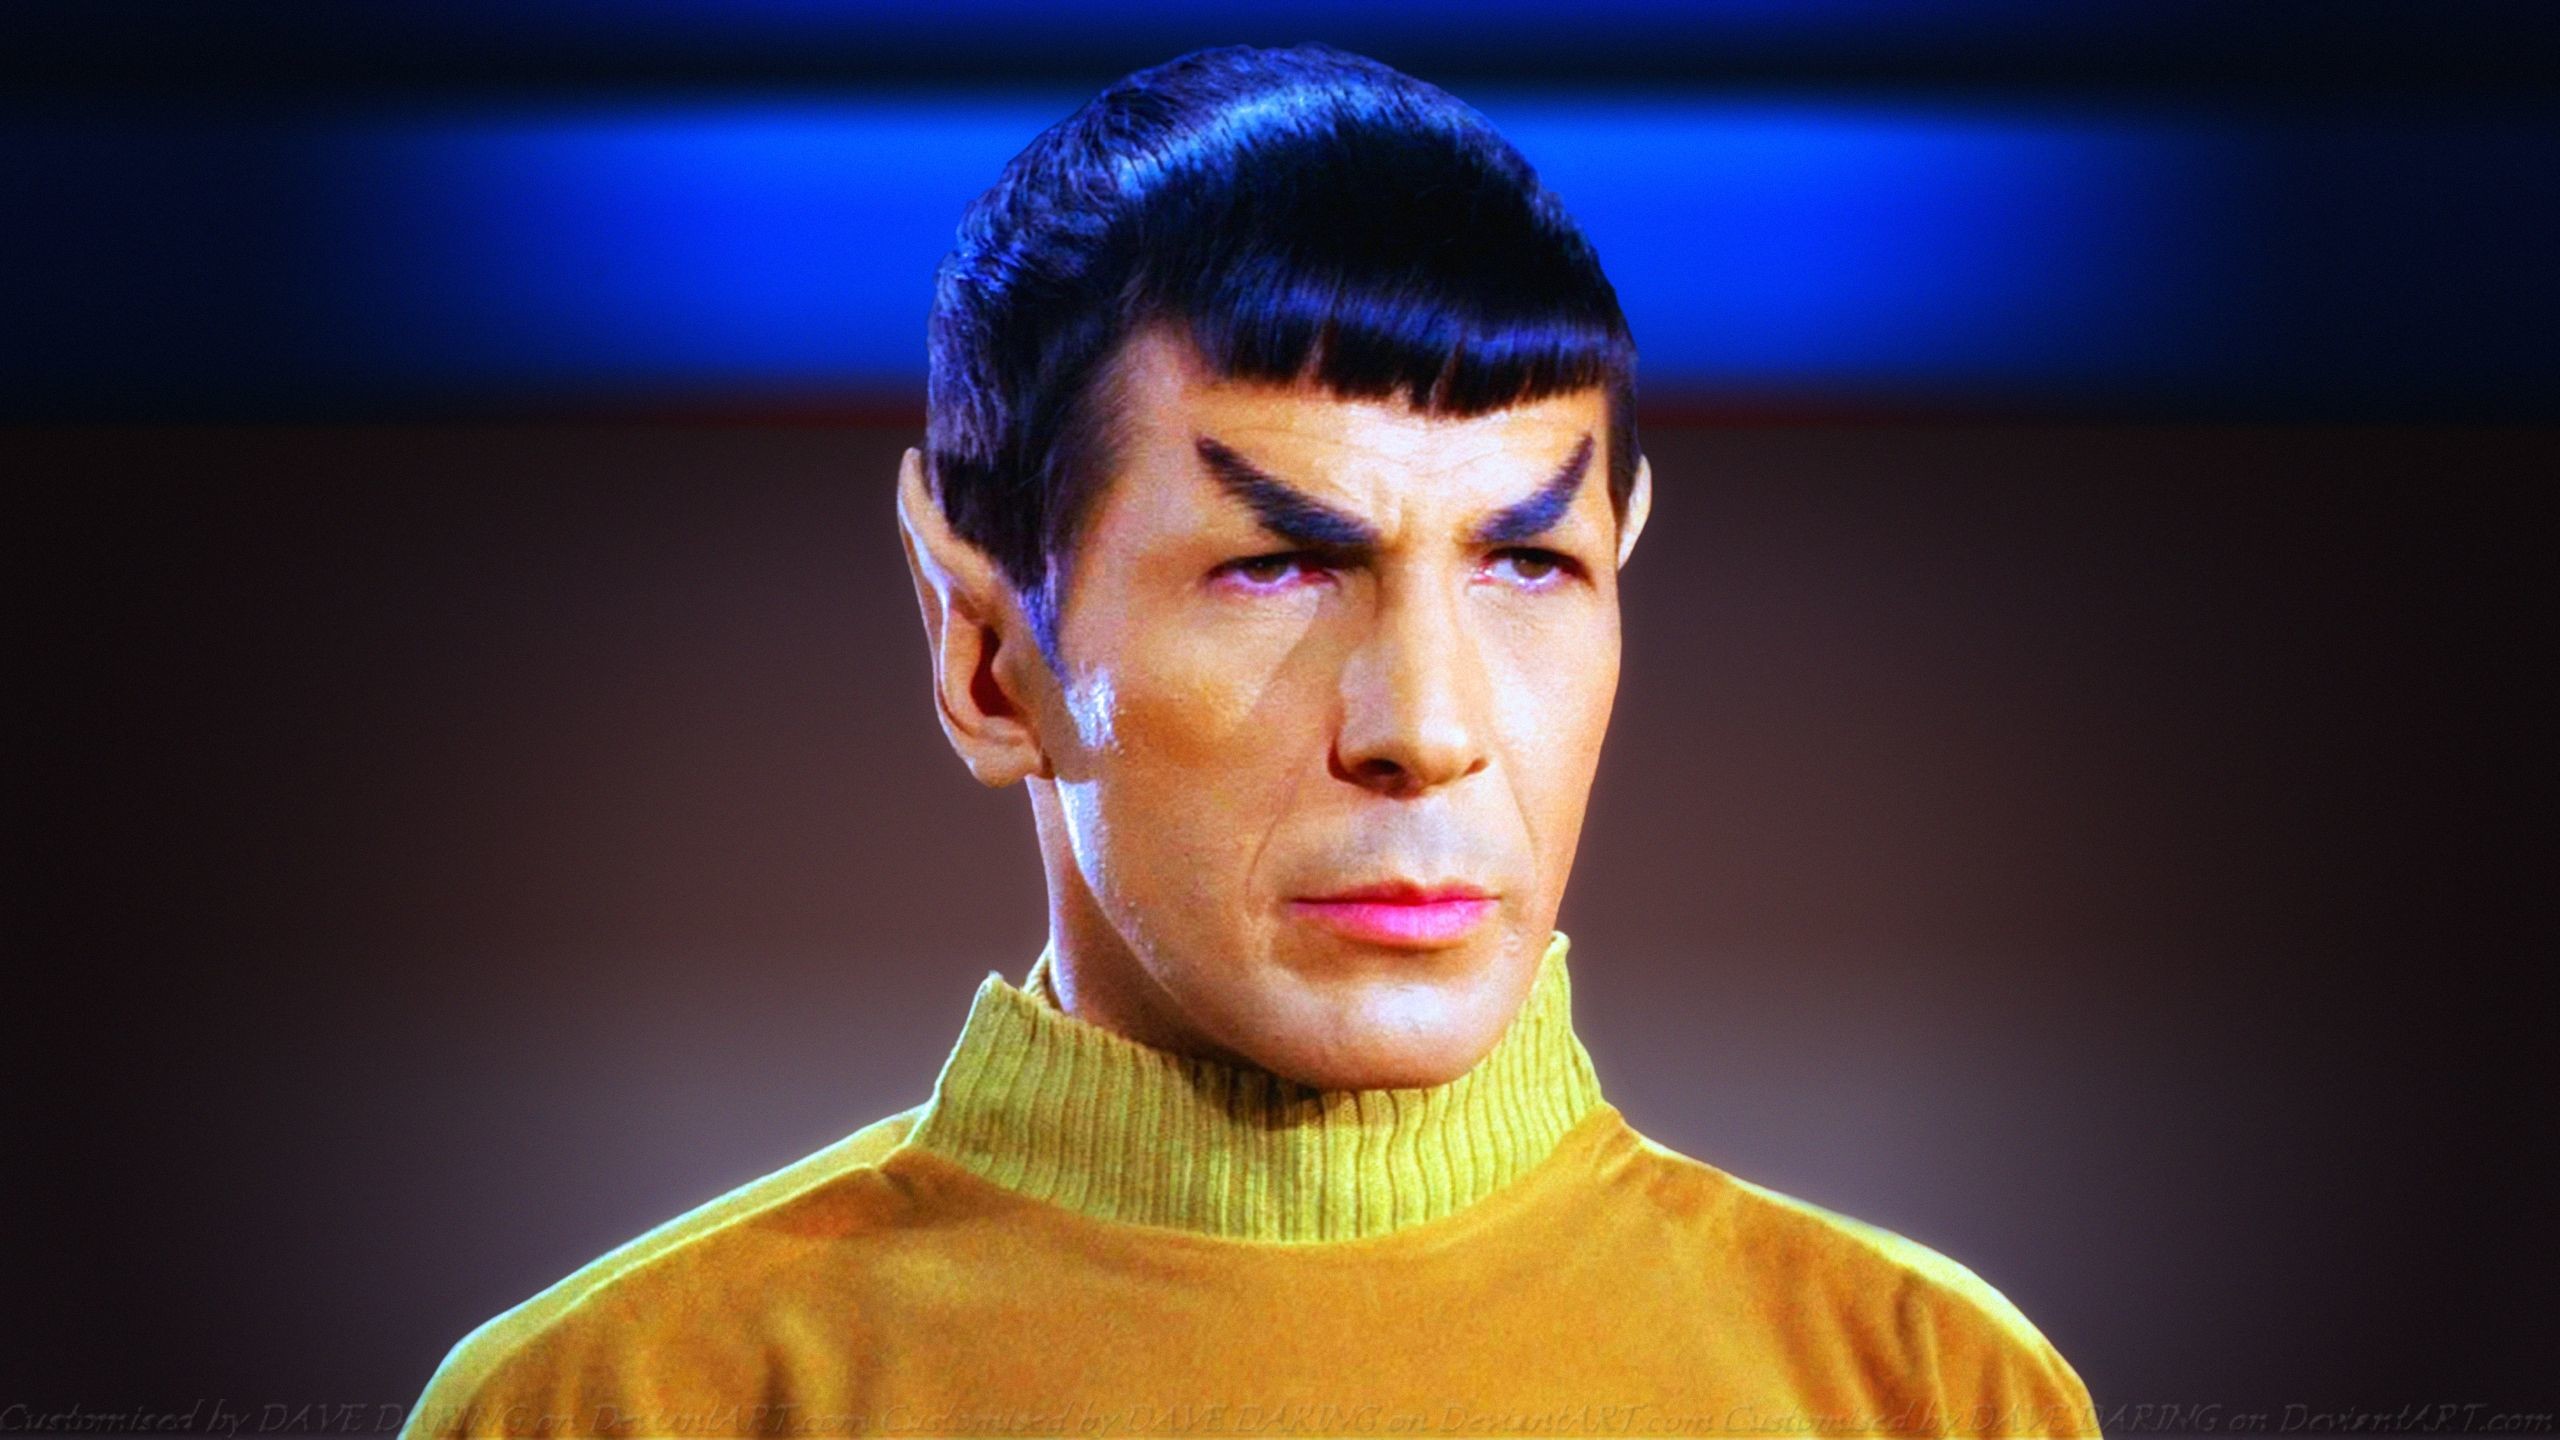 2560x1440 ... Leonard Nimoy Spock VII by Dave-Daring